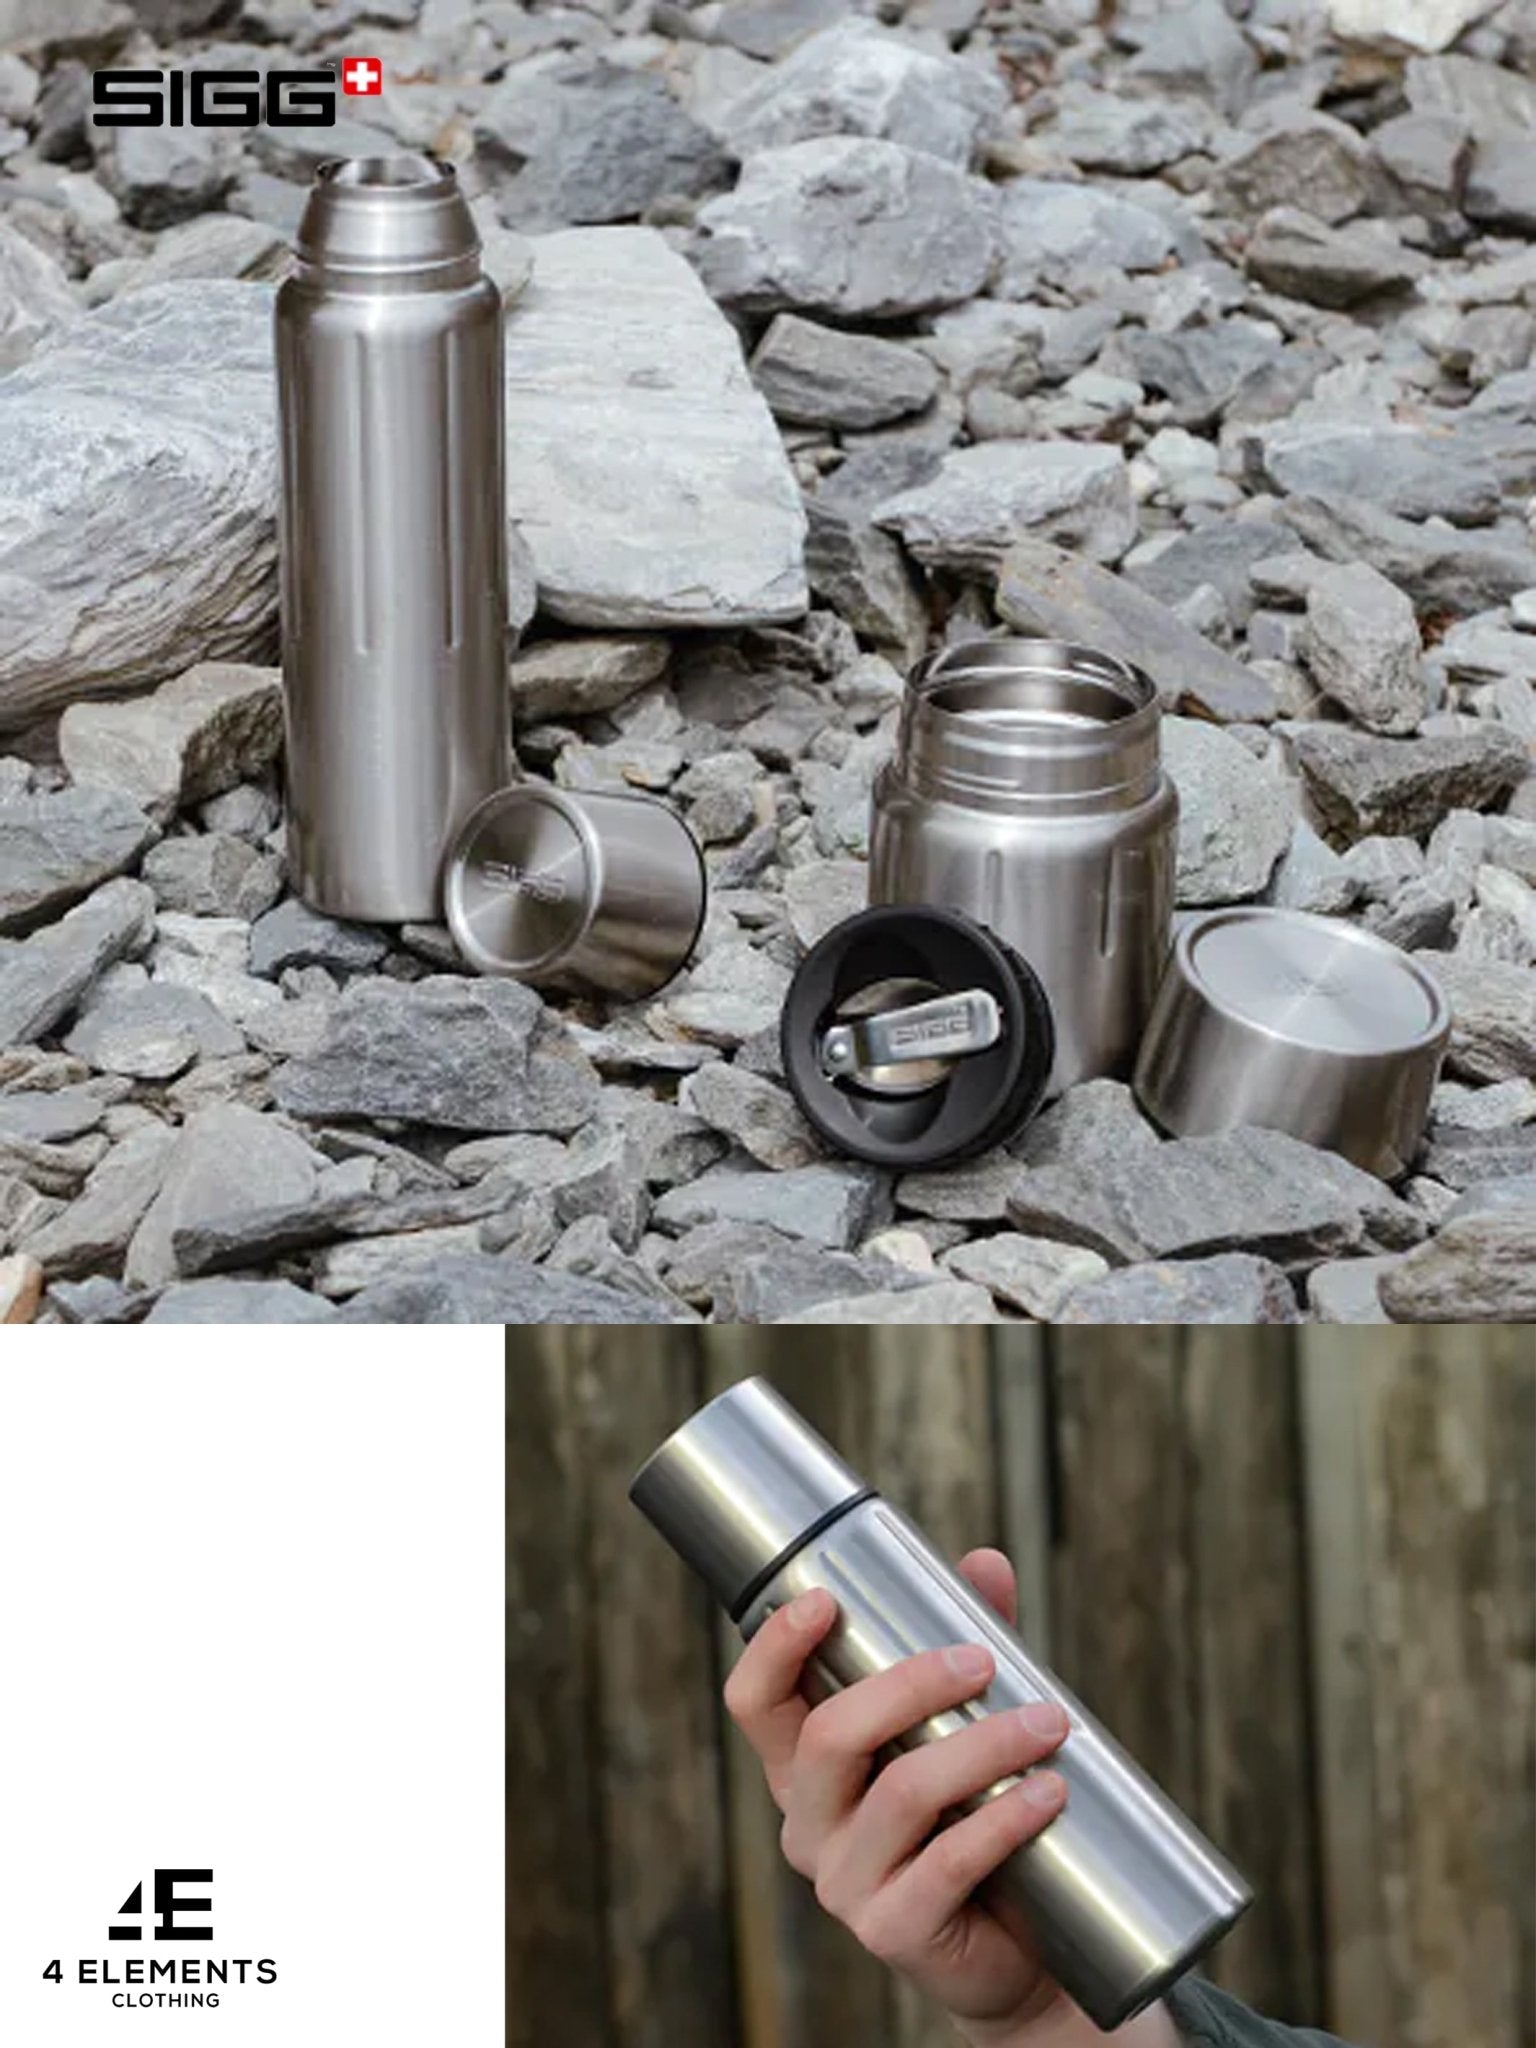 4elementsclothingSiggSIGG - Thermo Flask Gemstone IBT Selenite Flask & Mug Set - Classic flask and water bottleWater Bottles8735.5